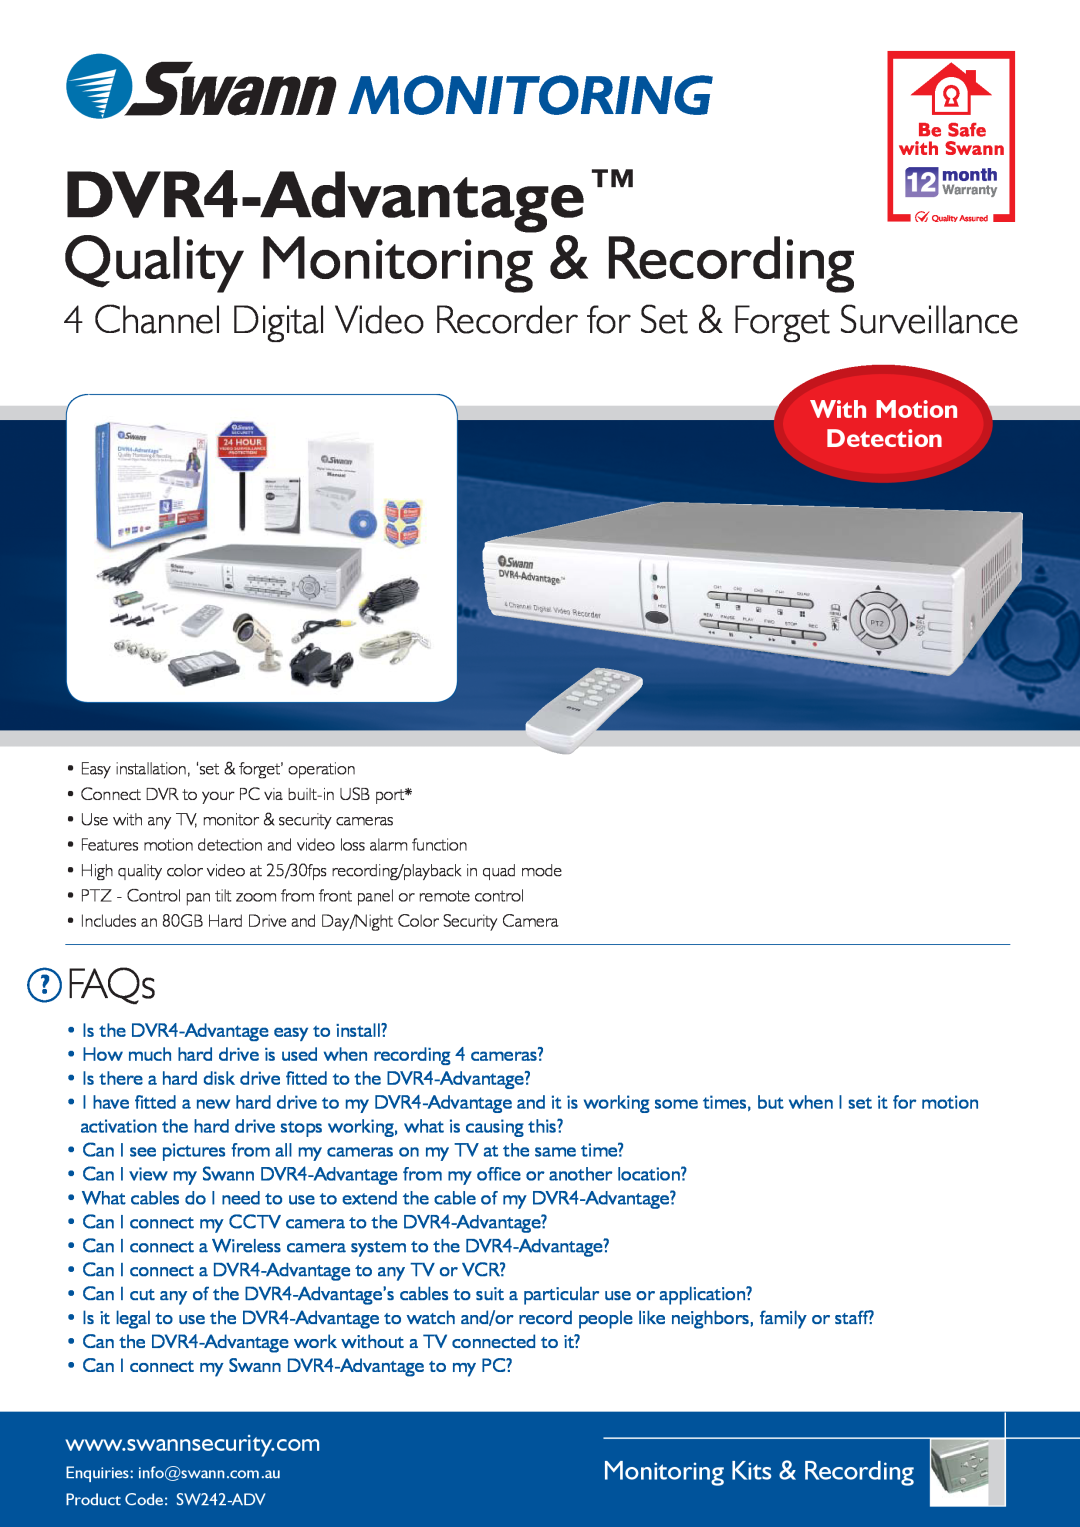 Swann SW242-ADV warranty Monitoring Kits & Recording, DVR4-Advantage 12 monthWarranty, Quality Monitoring & Recording 